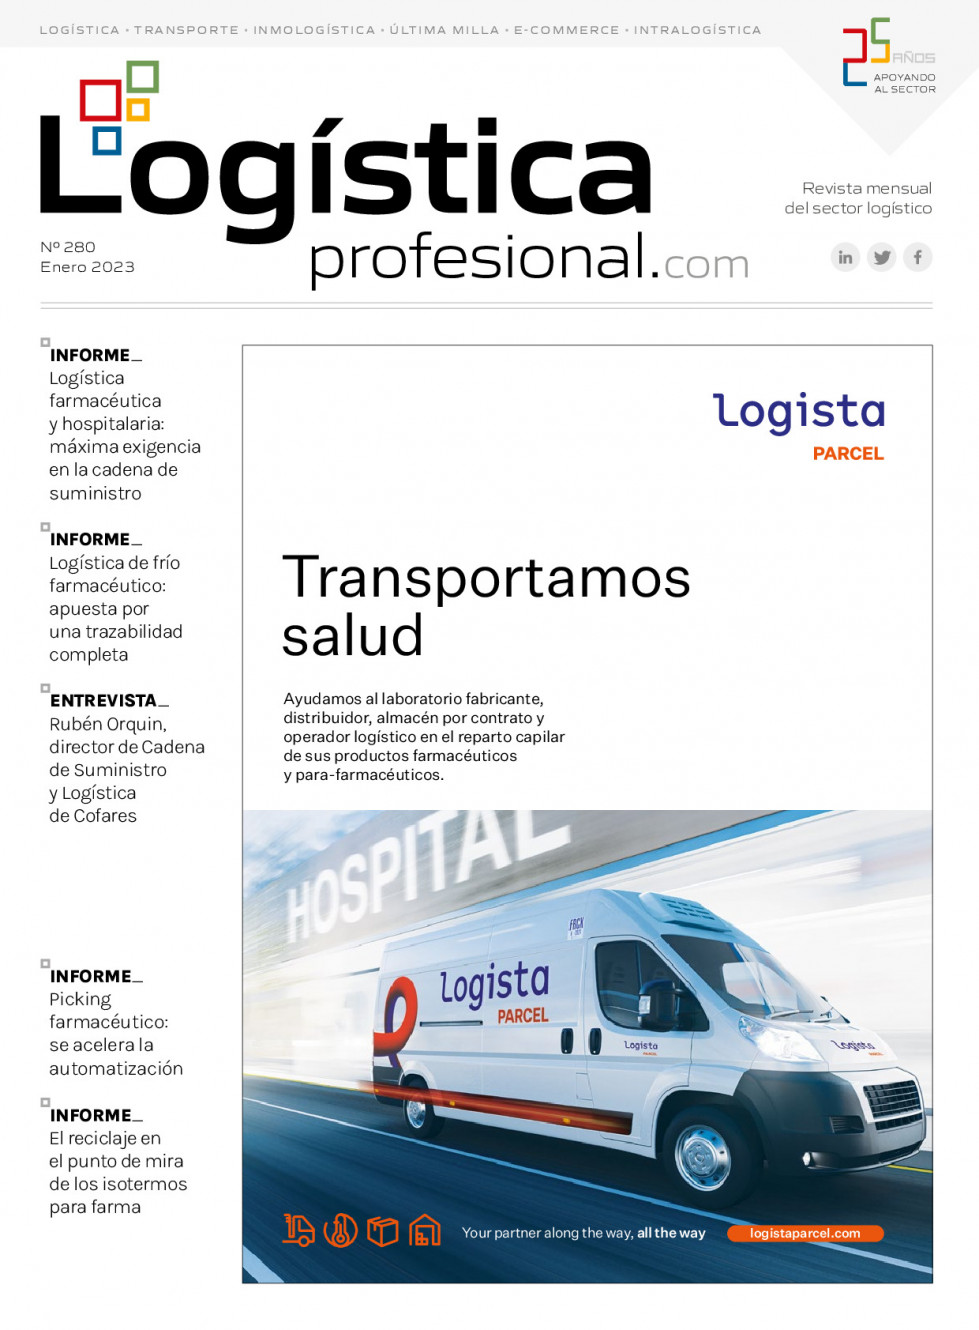 Logistica280 1